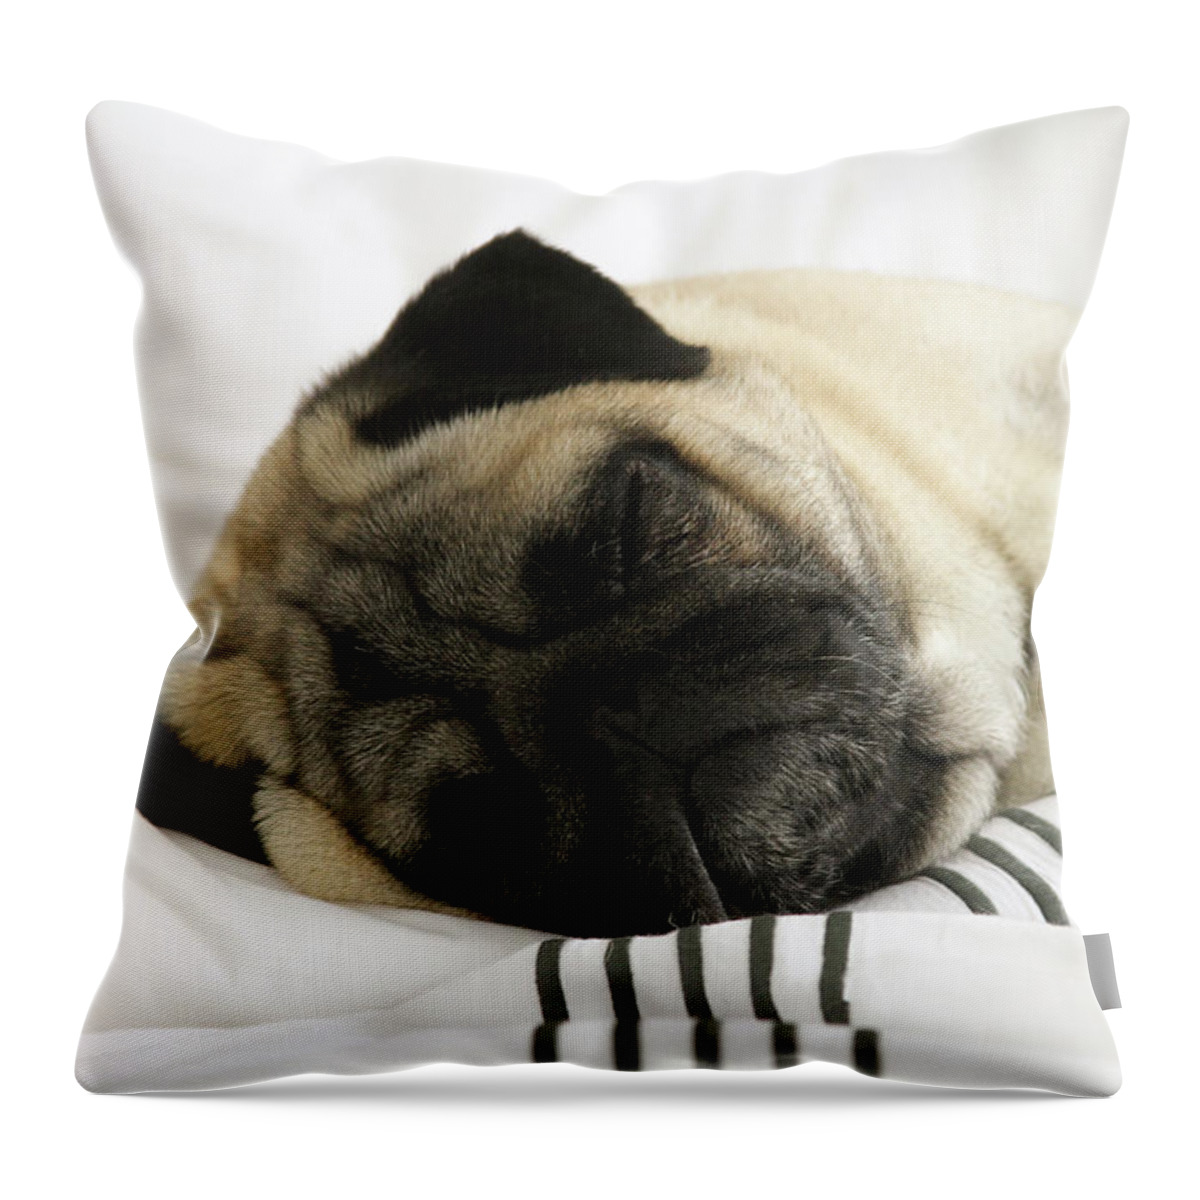 Pug Throw Pillow featuring the photograph Sleeping Pug by Jackson Pearson